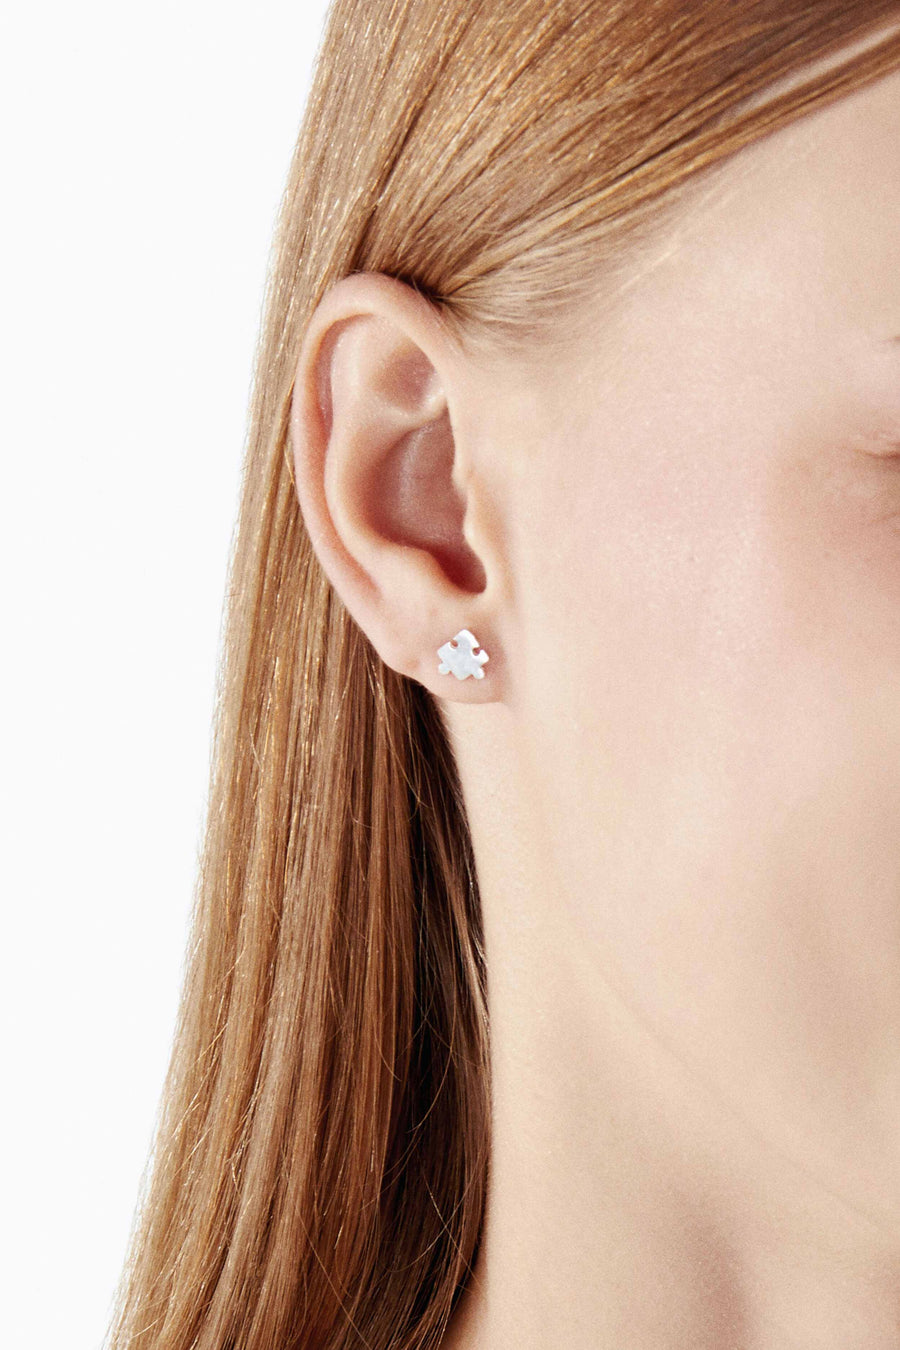 Lovesick Jewelry Sterling Silver Puzzle Stud Earrings